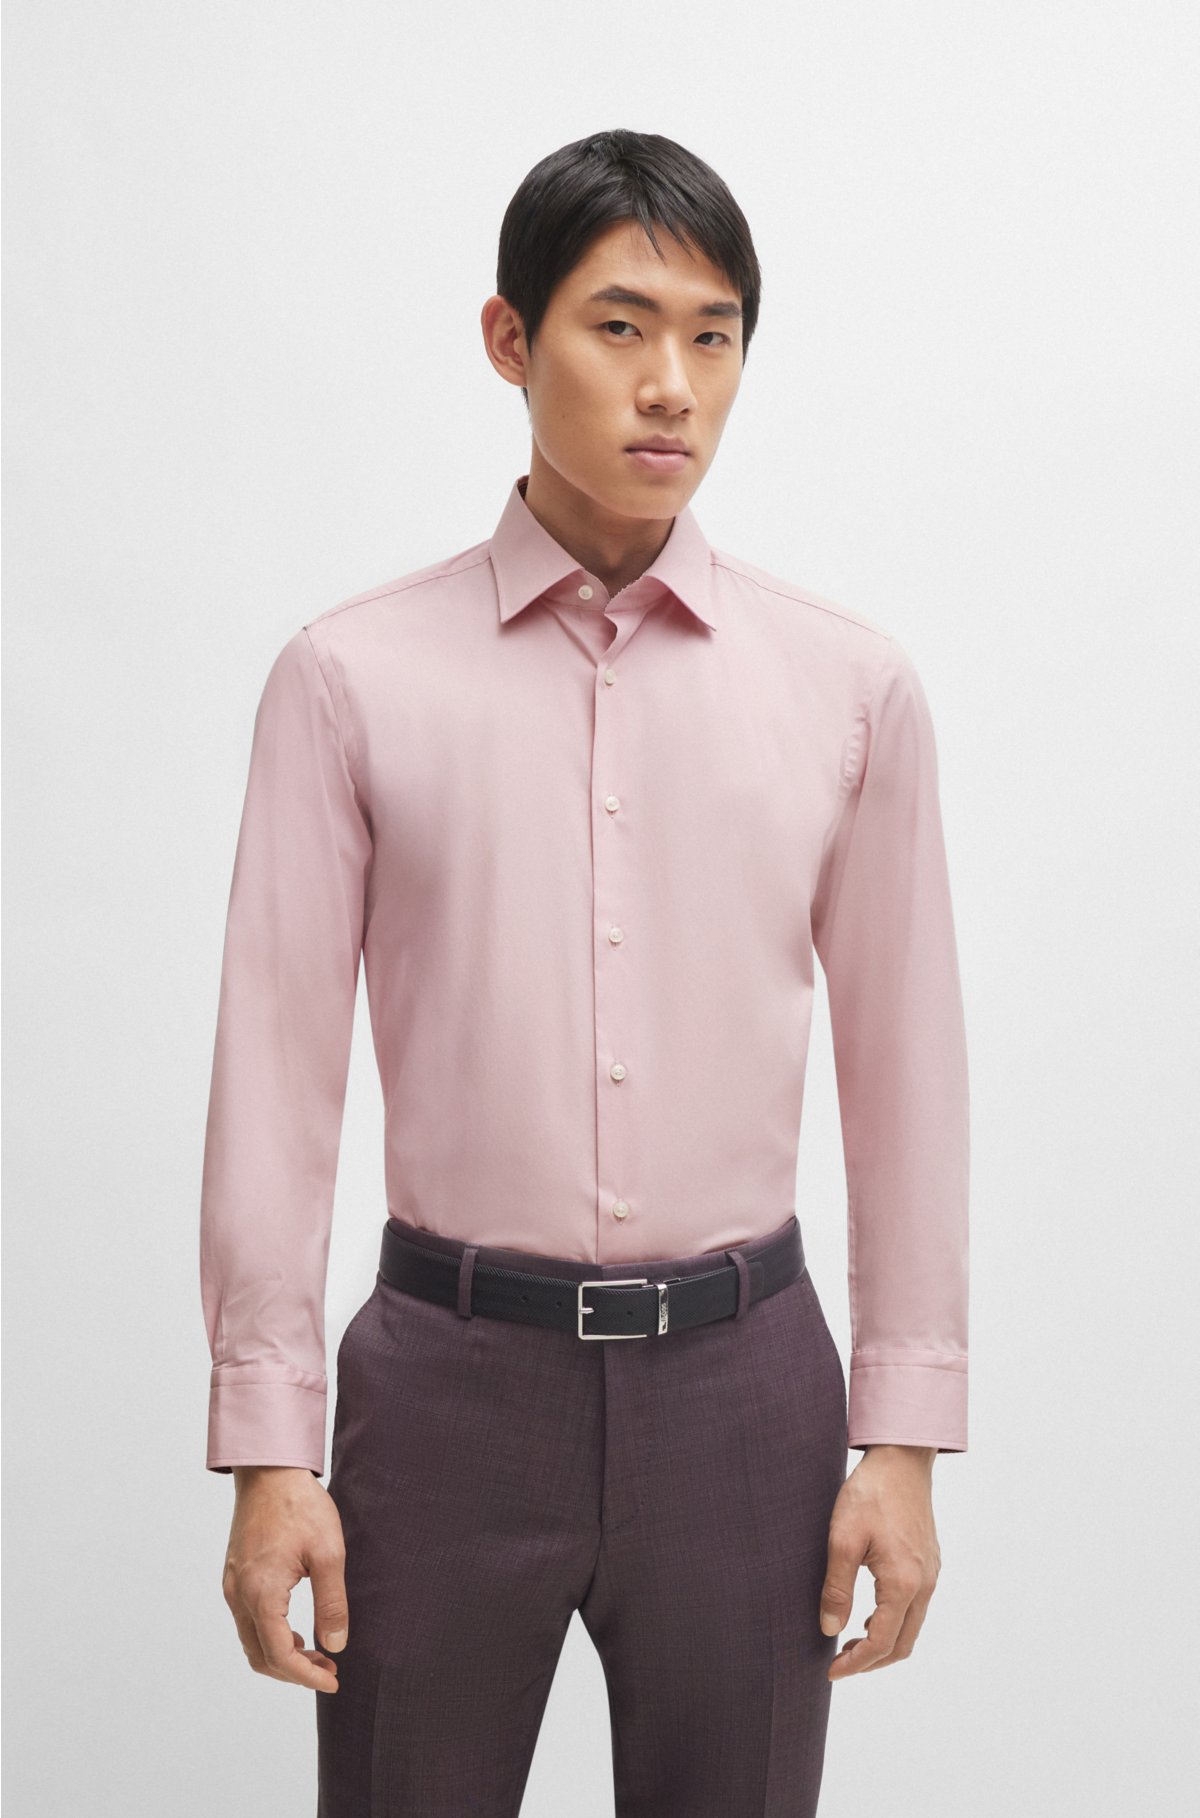 Slim-fit shirt in easy-iron cotton poplin